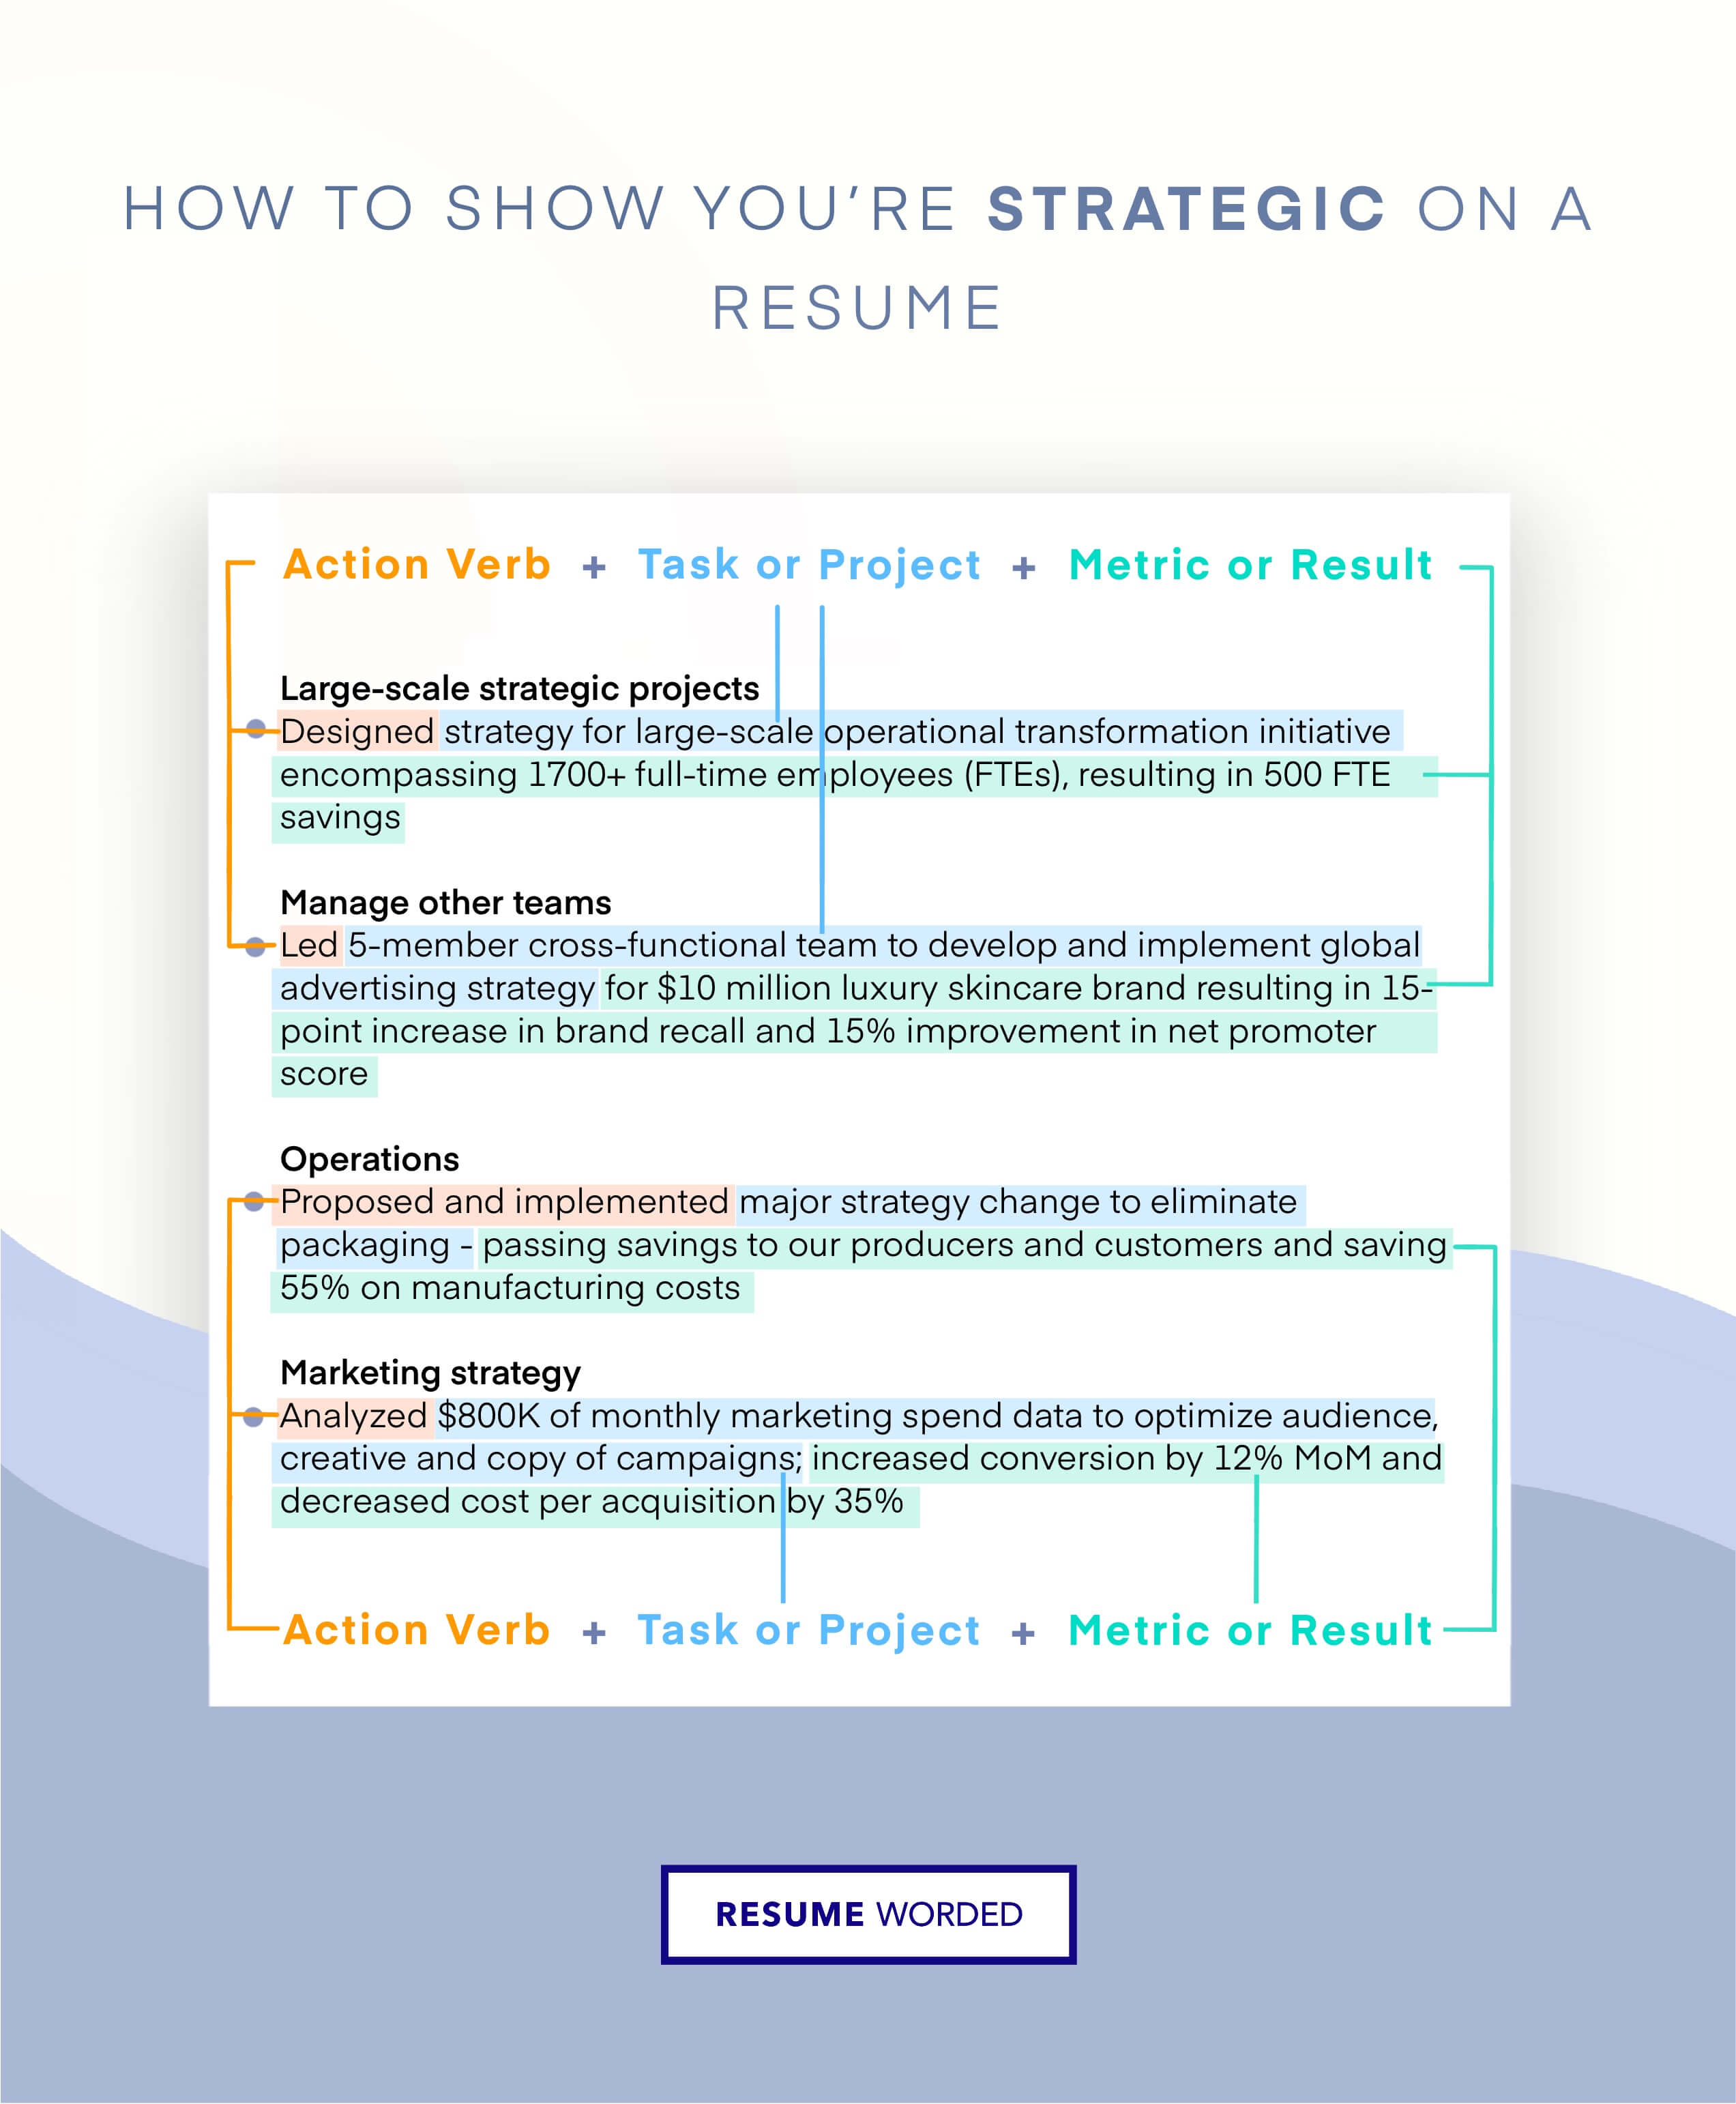 Highlight your strategic planning skills - Logistics Manager CV